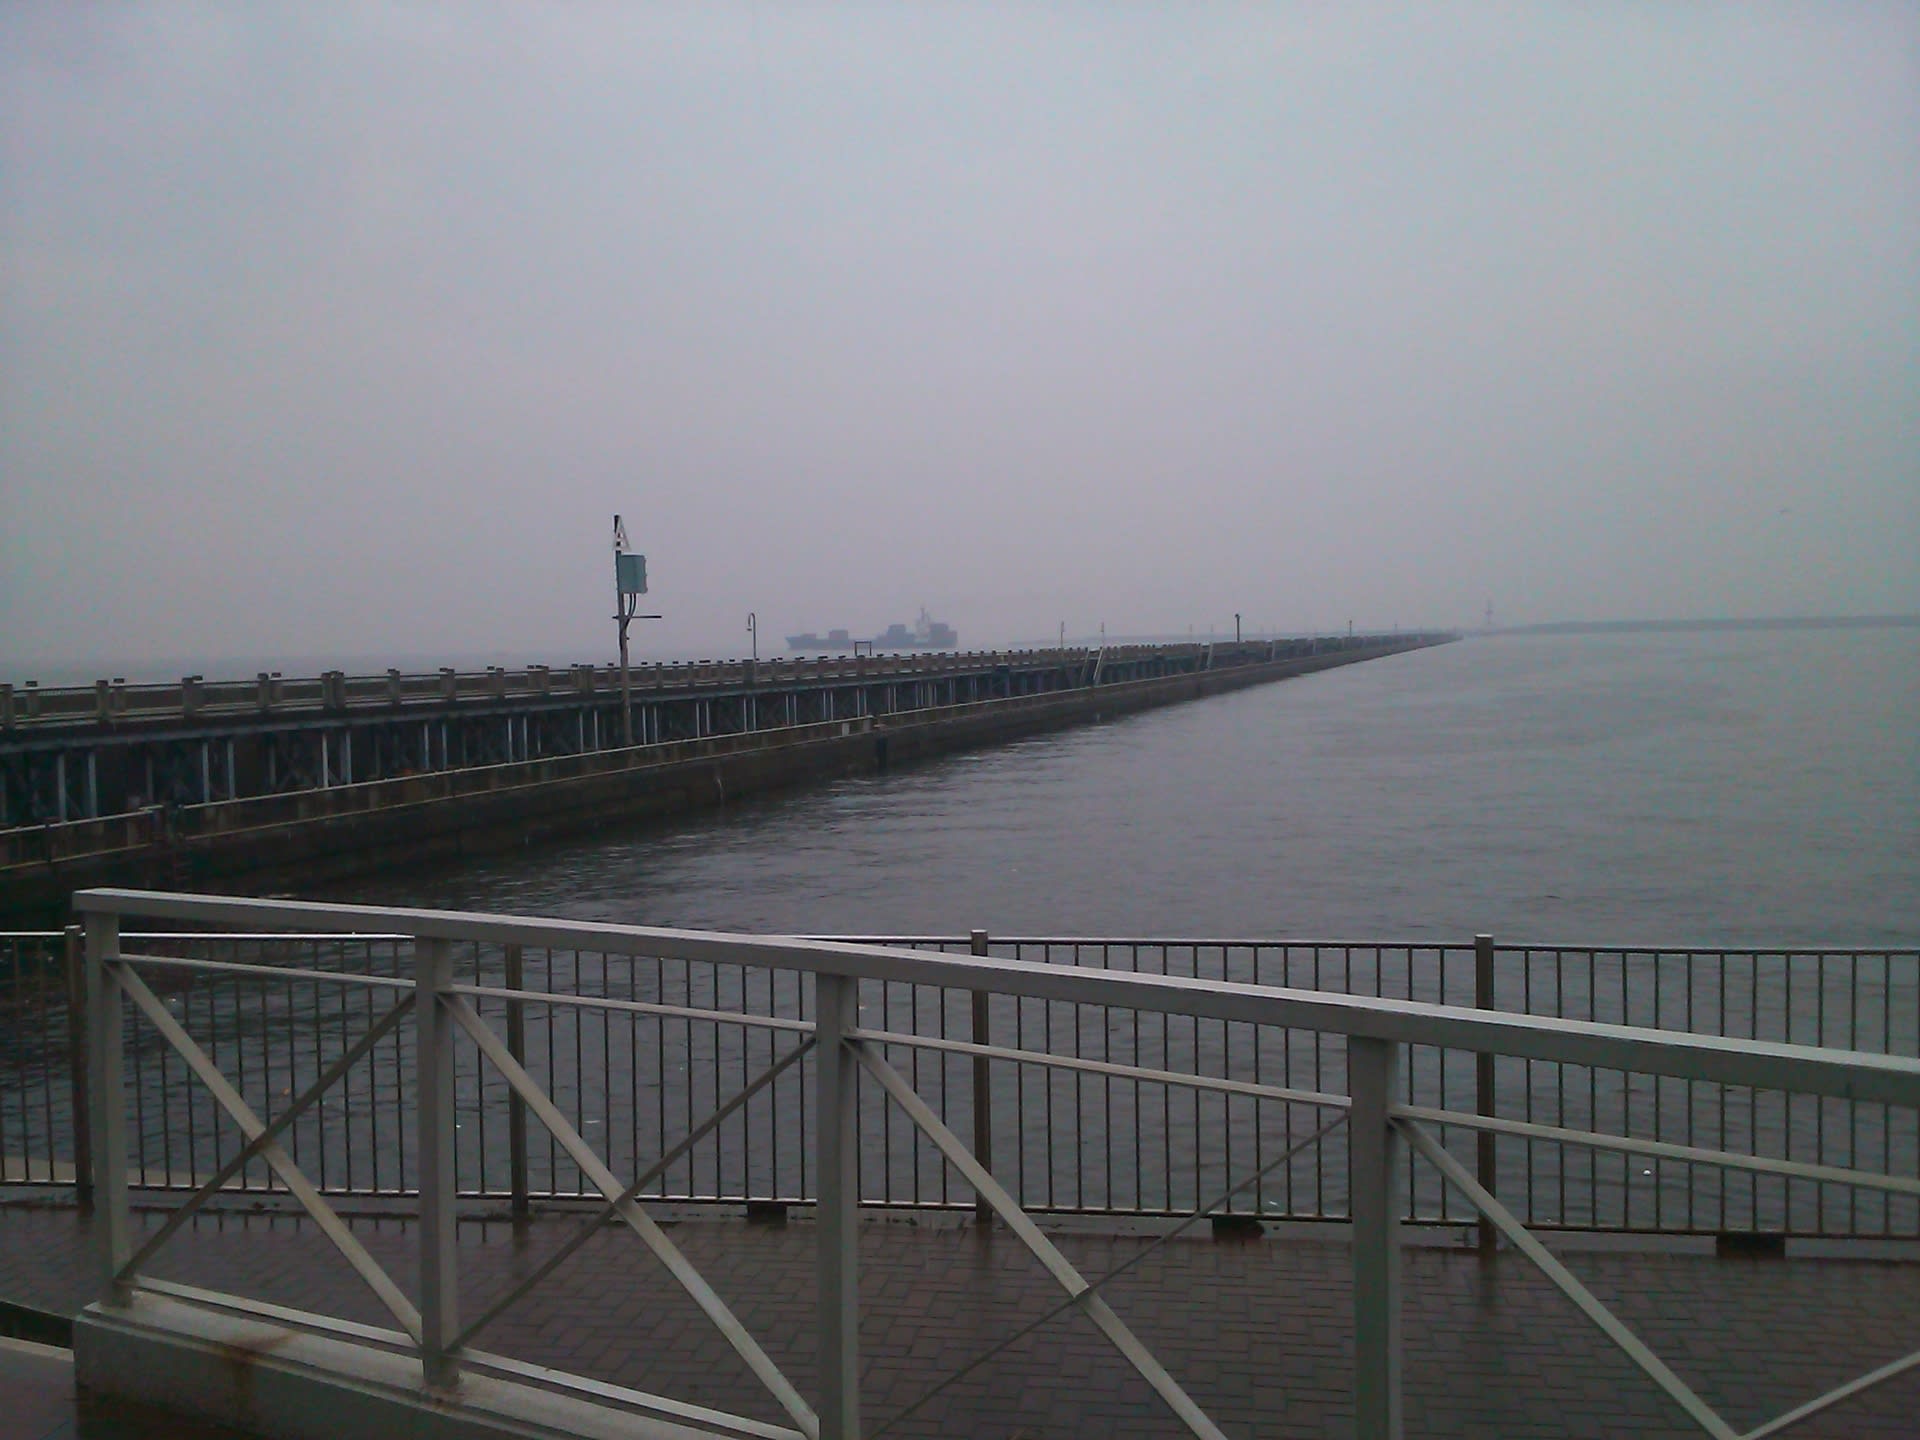 名古屋 港 海 釣り 公園